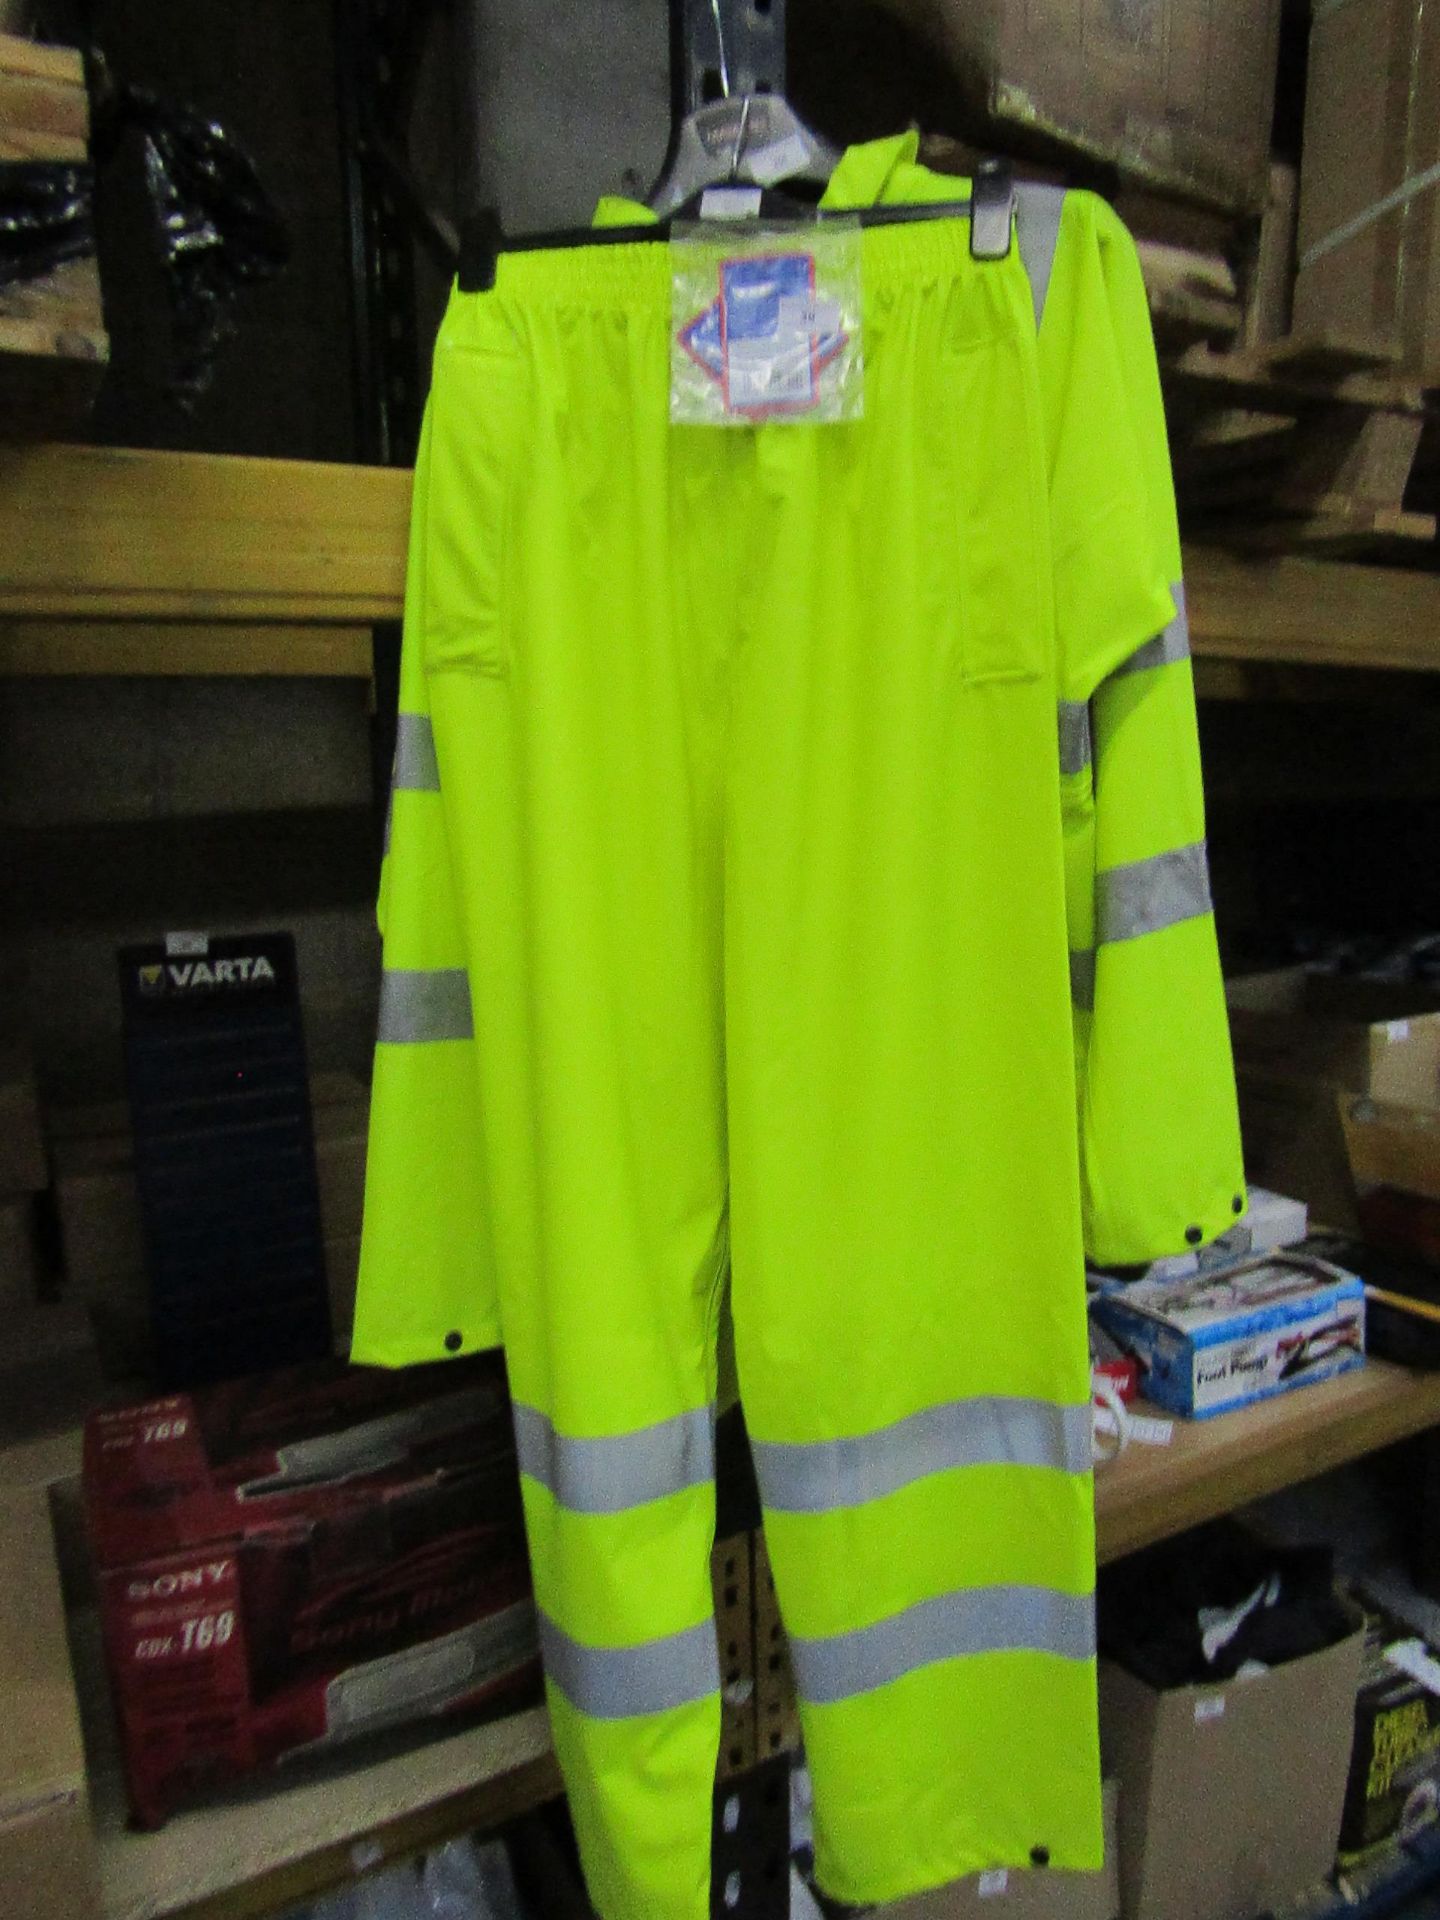 1x ST Workwear - Hi-Vis Yellow PU Trousers - Size Medium - With Original Tags. & 1x ST Workwear -